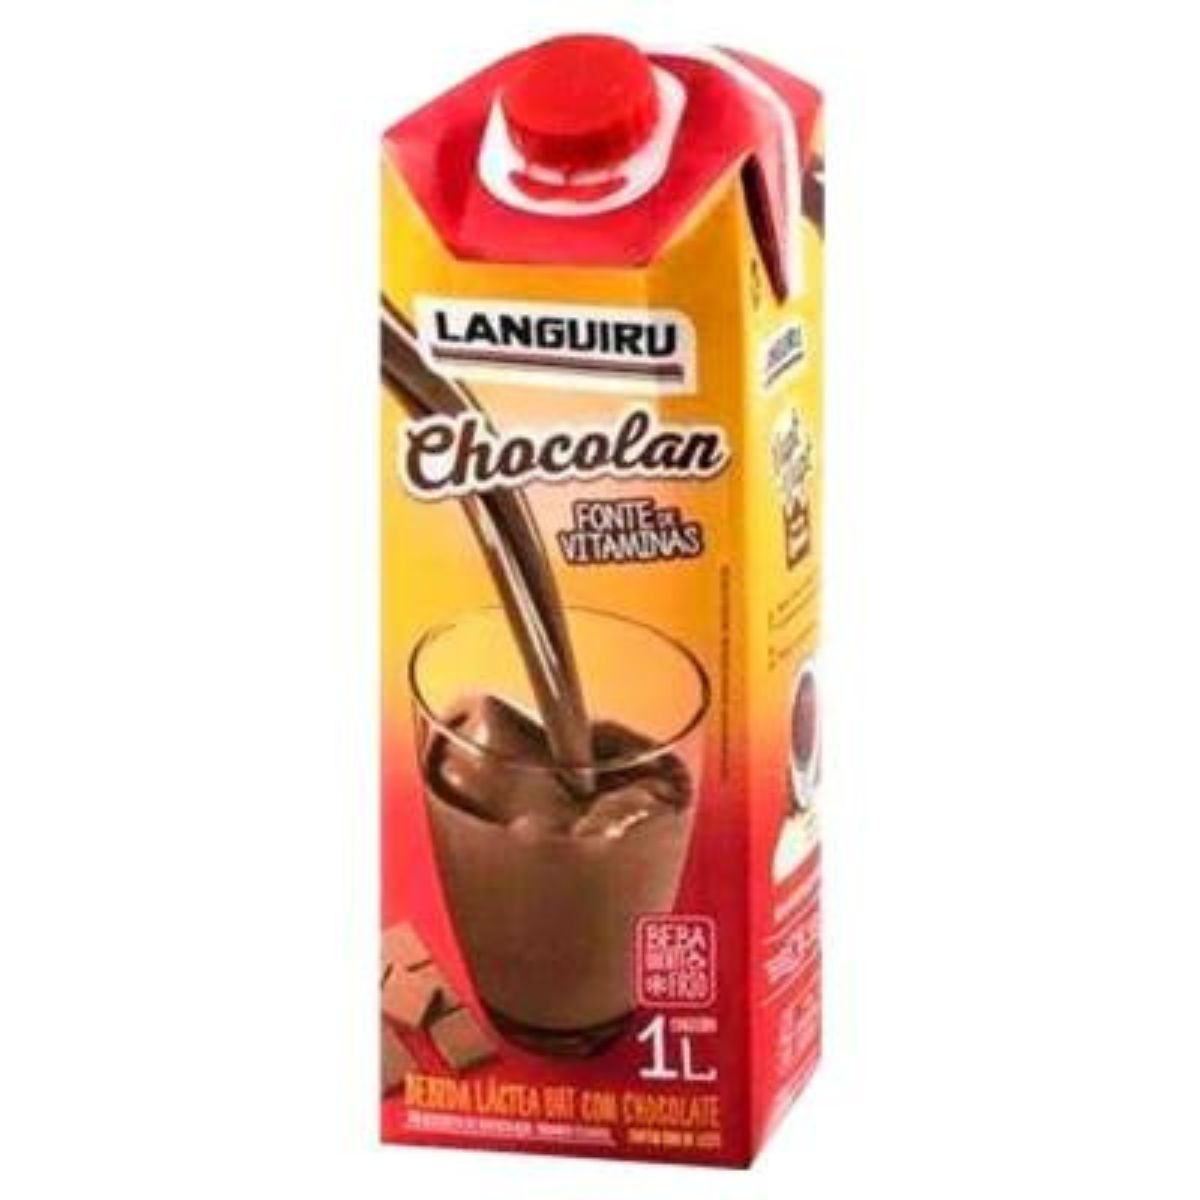 beb-lactea-chocolan-chocolate-1l-1.jpg